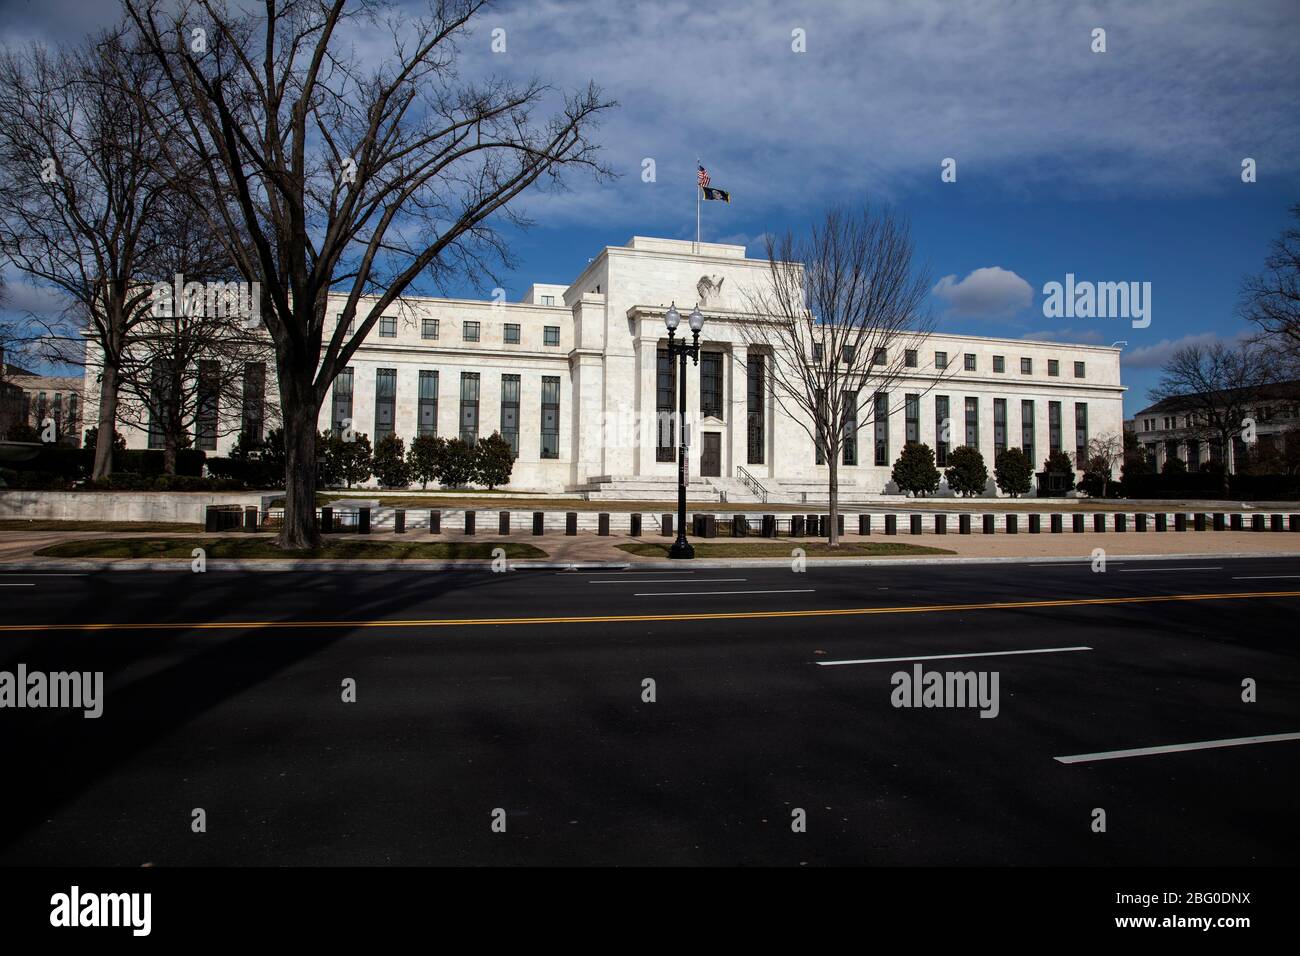 Das Marriner S. Eccles Federal Reserve Board Building an der 20th Street und Constitution Avenue in Washington DC, USA Stockfoto